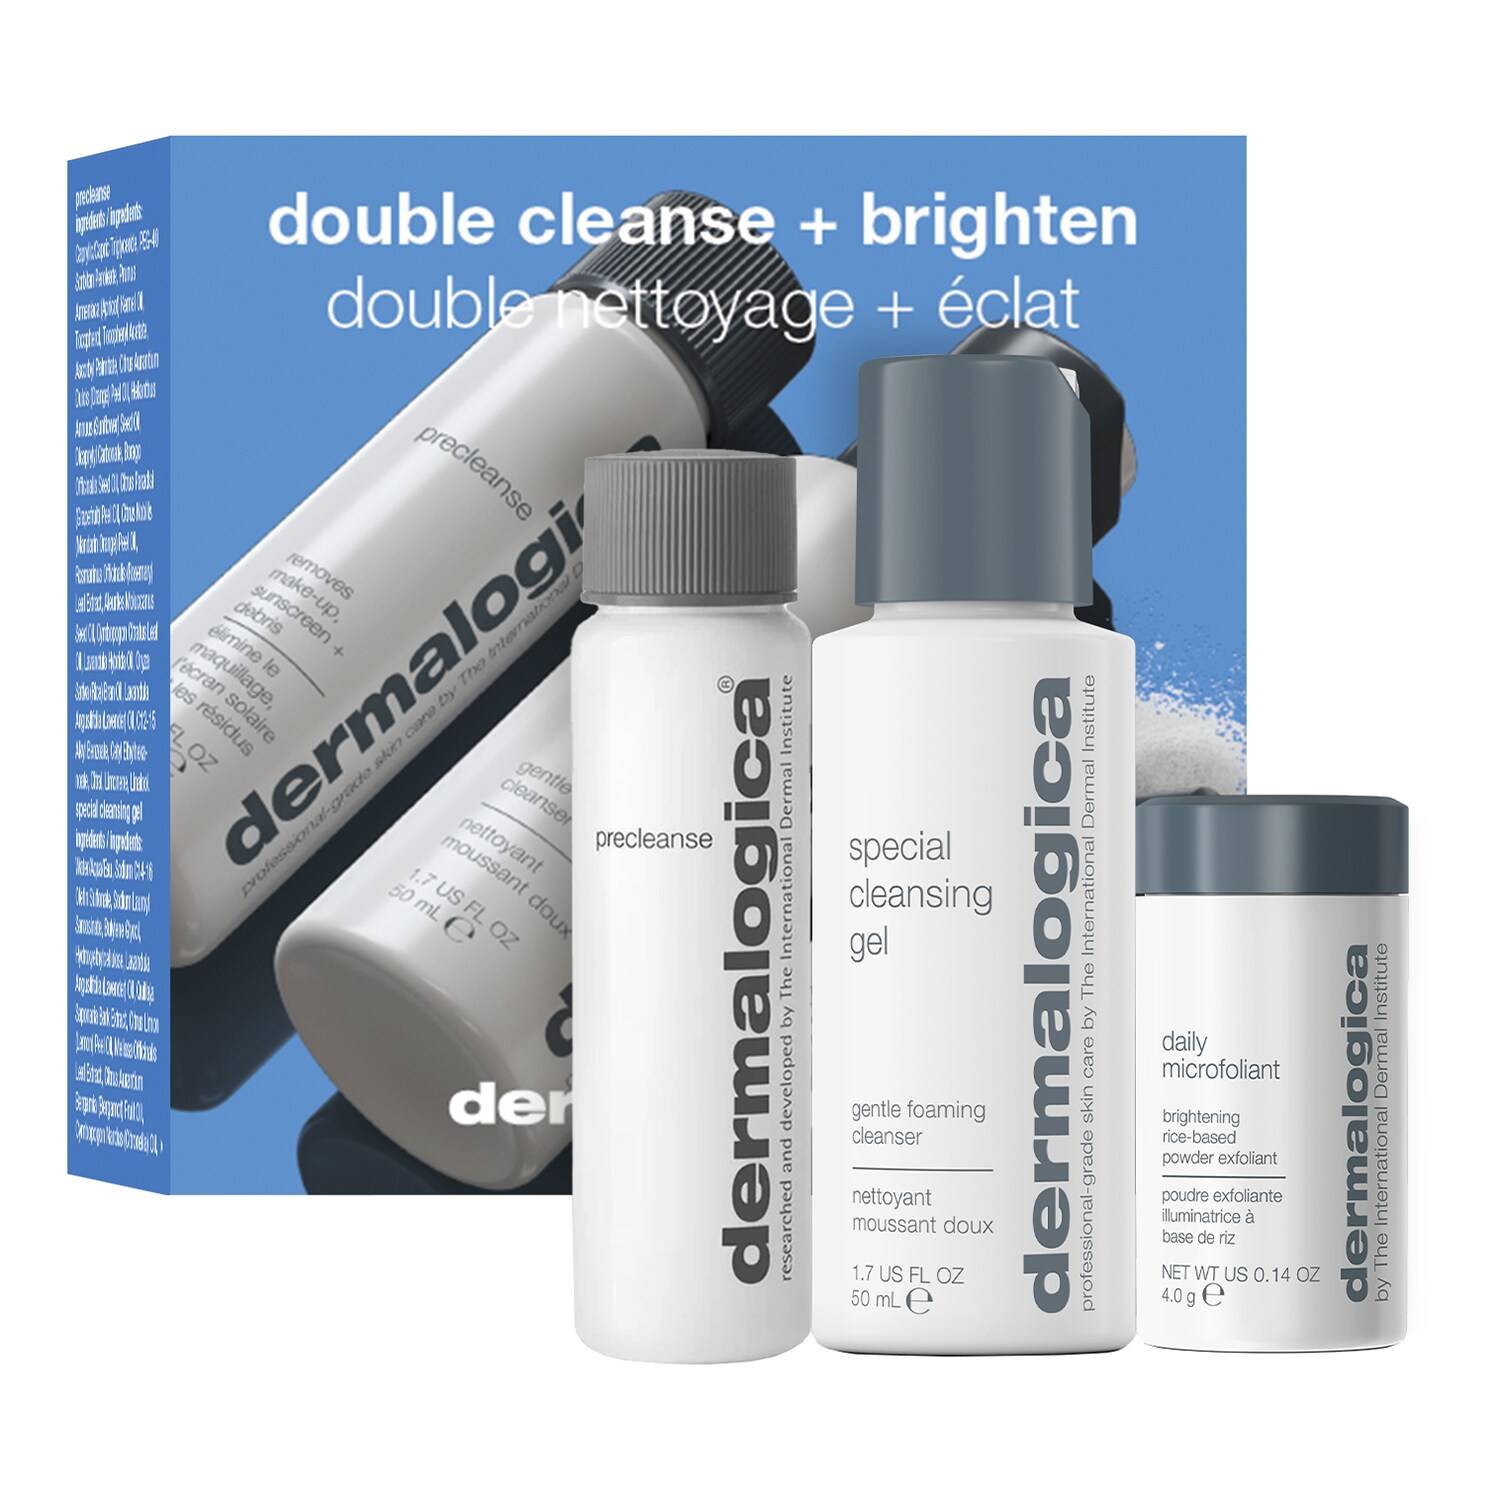 Dermalogica Double Cleanse + Brighten Kit